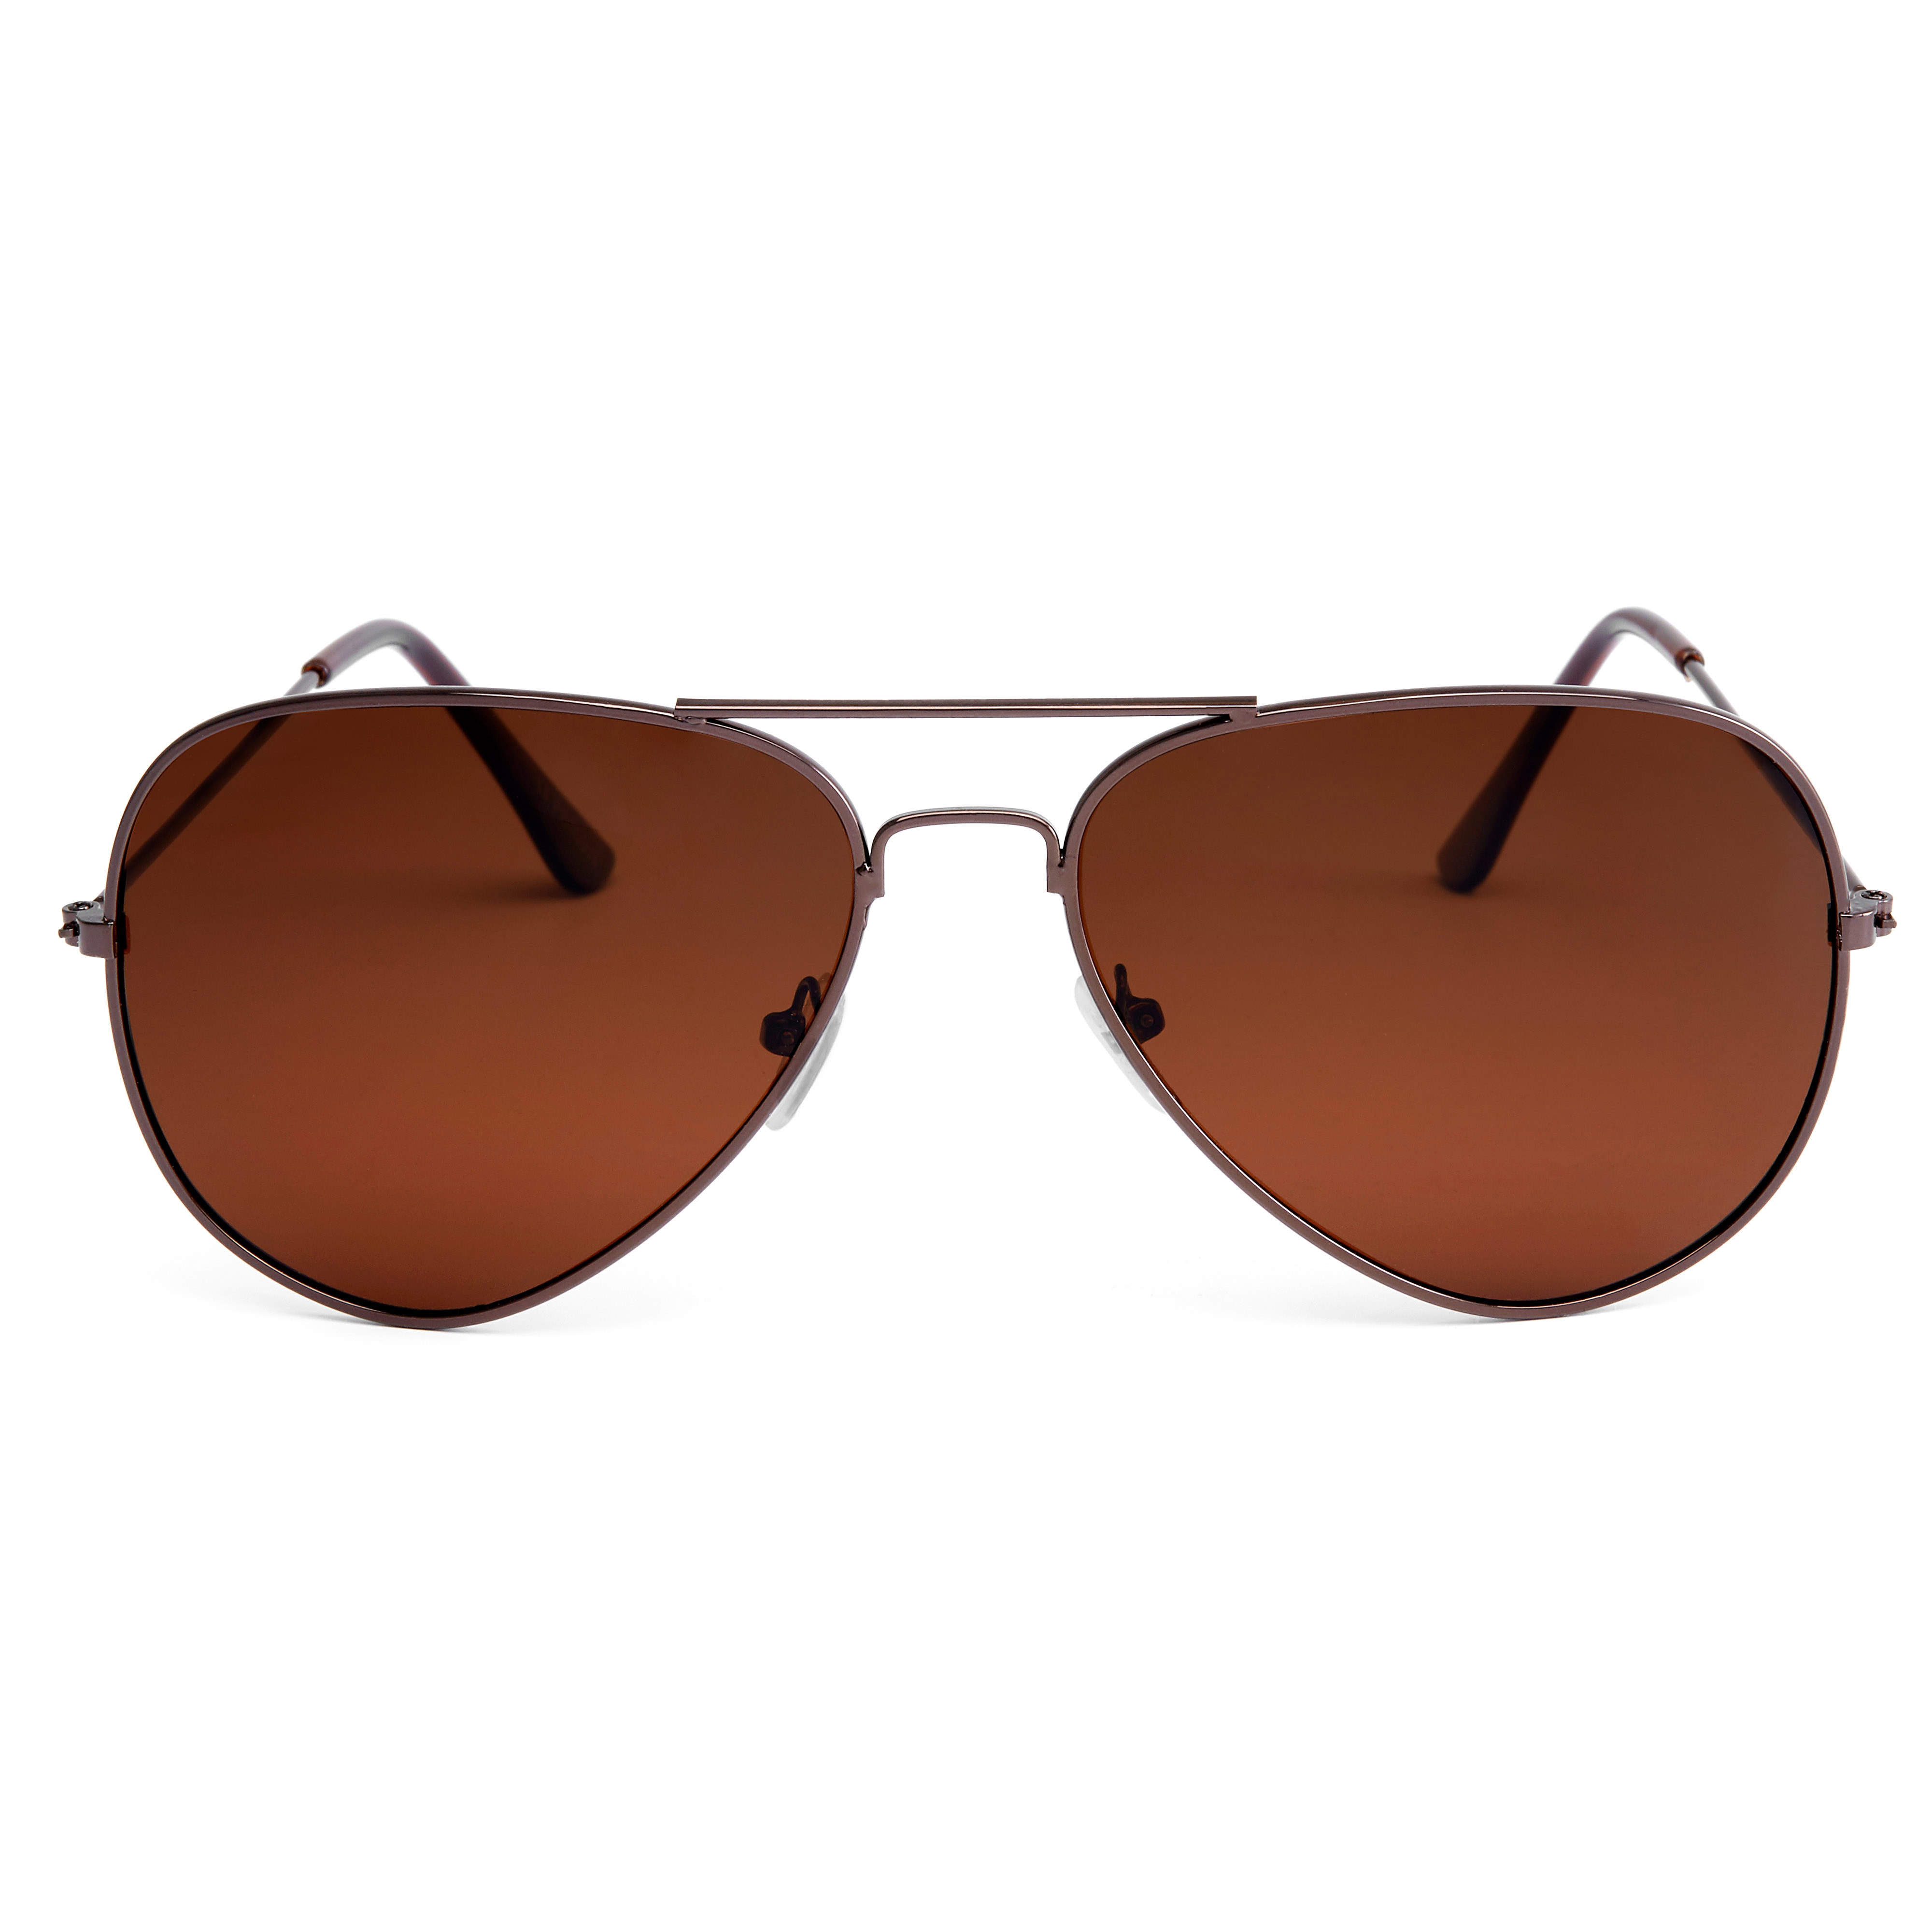 Share more than 225 fastrack traveller sunglasses super hot